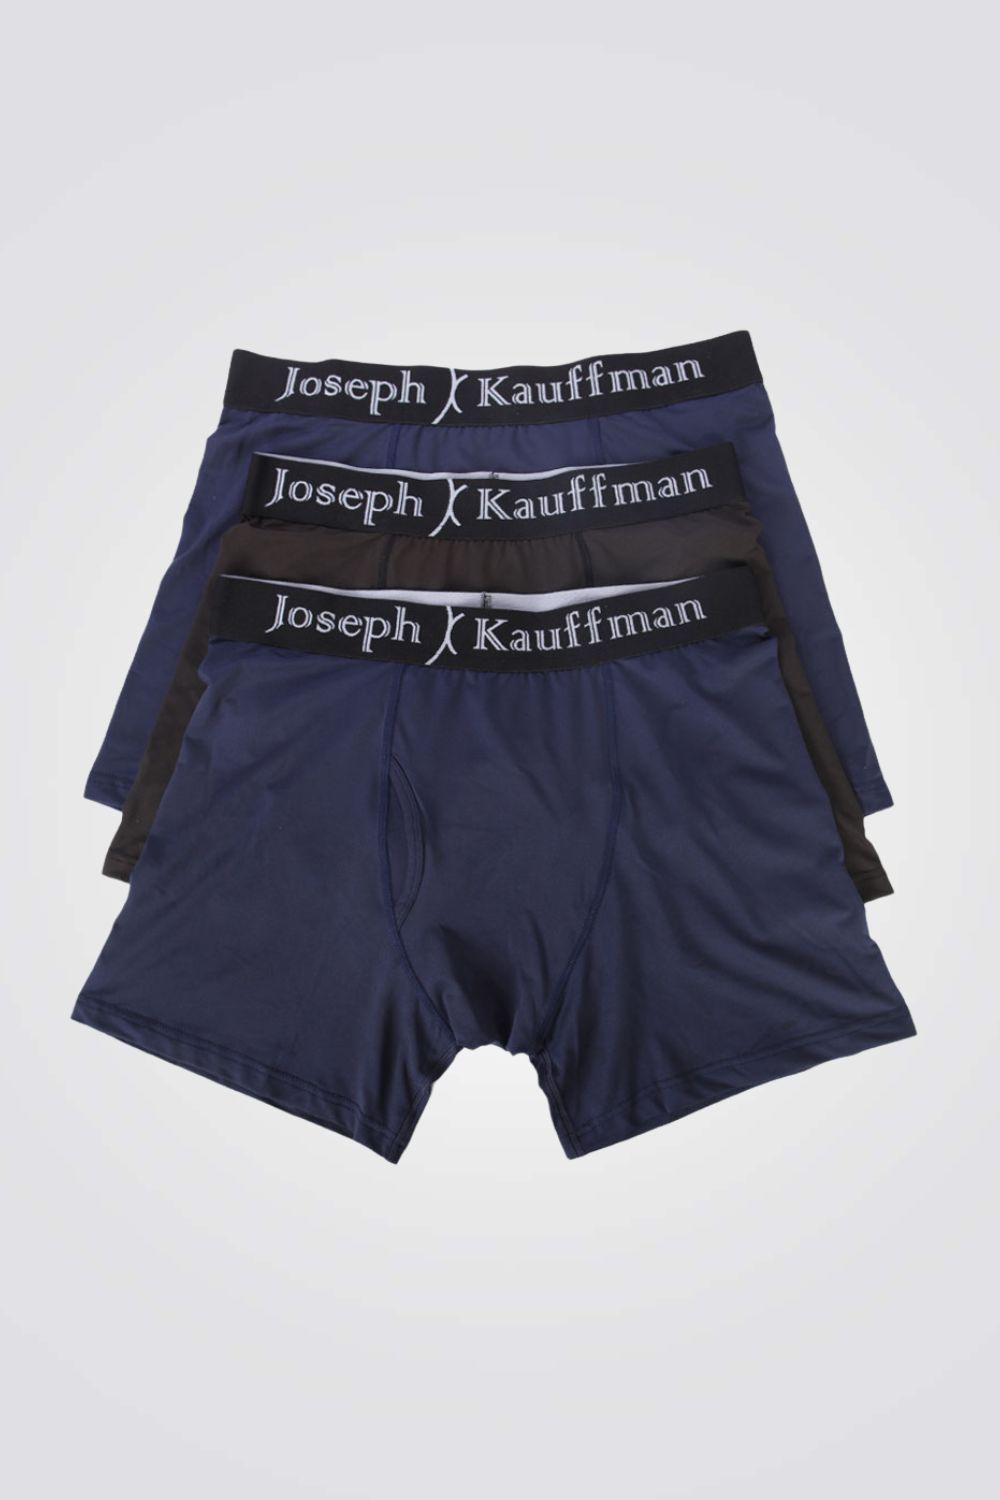 Joseph Kauffman - שלישיית בוקסרים ארוכים DRY FIT - MASHBIR//365